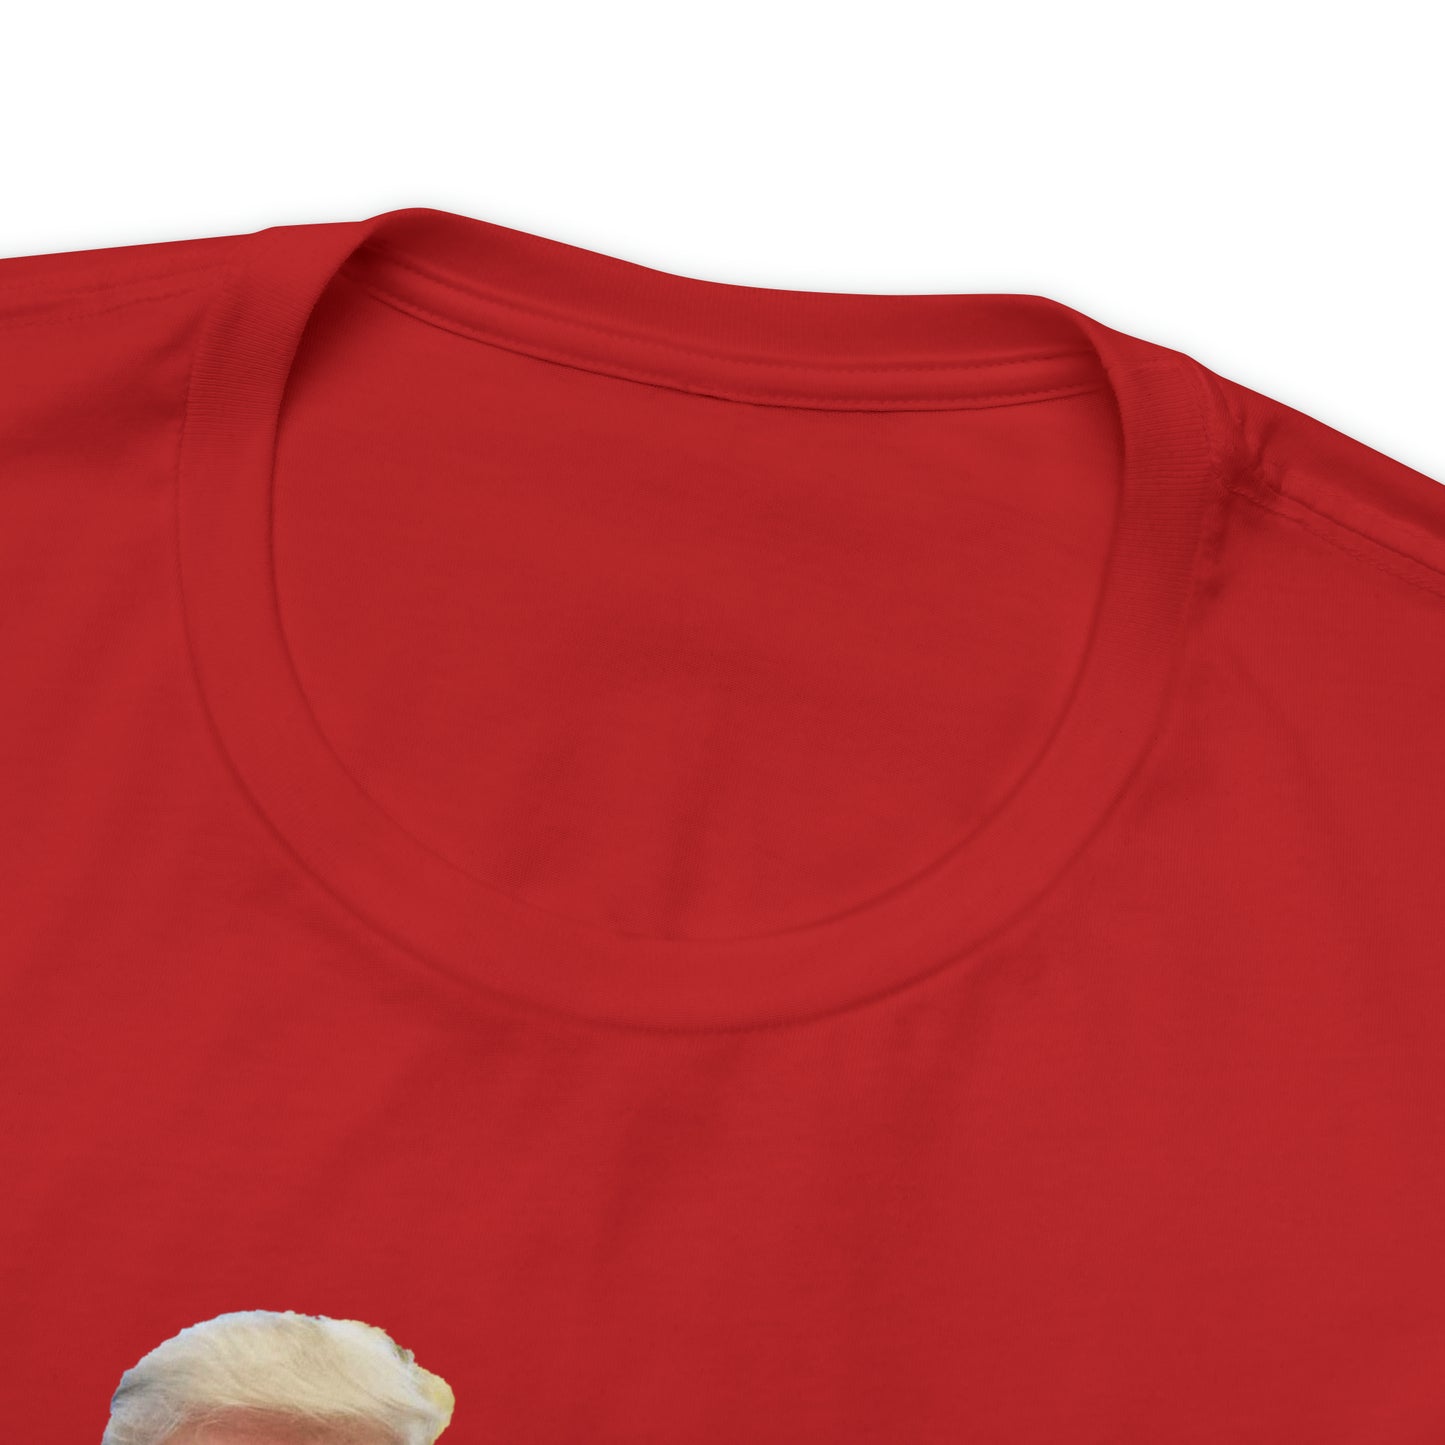 Donald Trump MKW CHAMPION T-Shirt